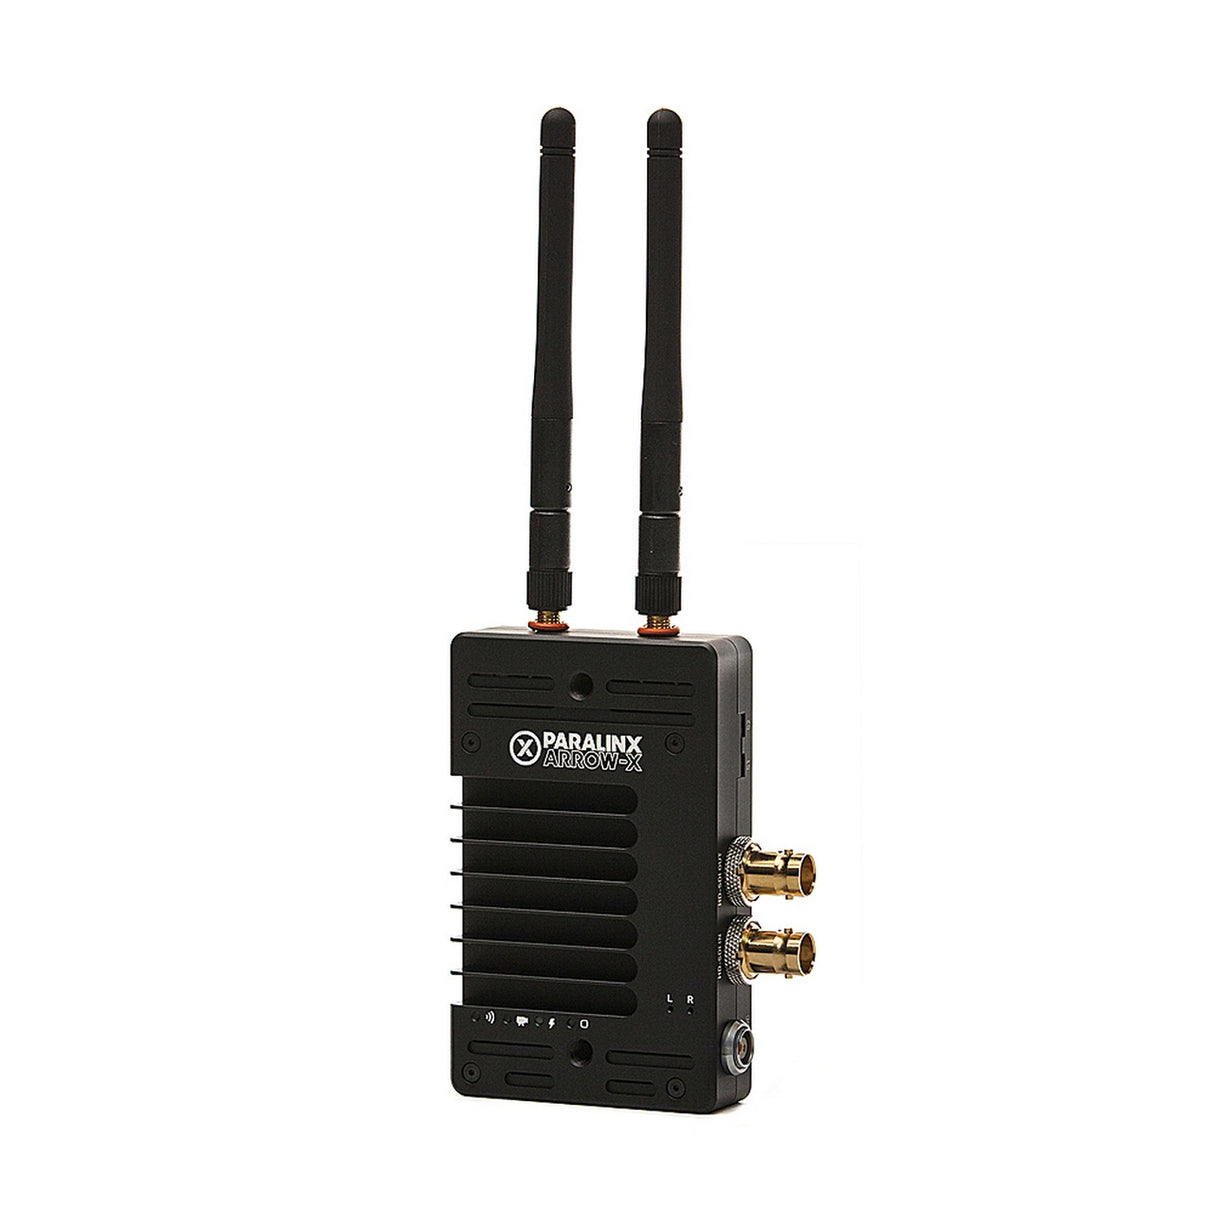 Paralinx ARROWXSDITRAN | Arrow-X SDI Transmitter HD Video Transmission System